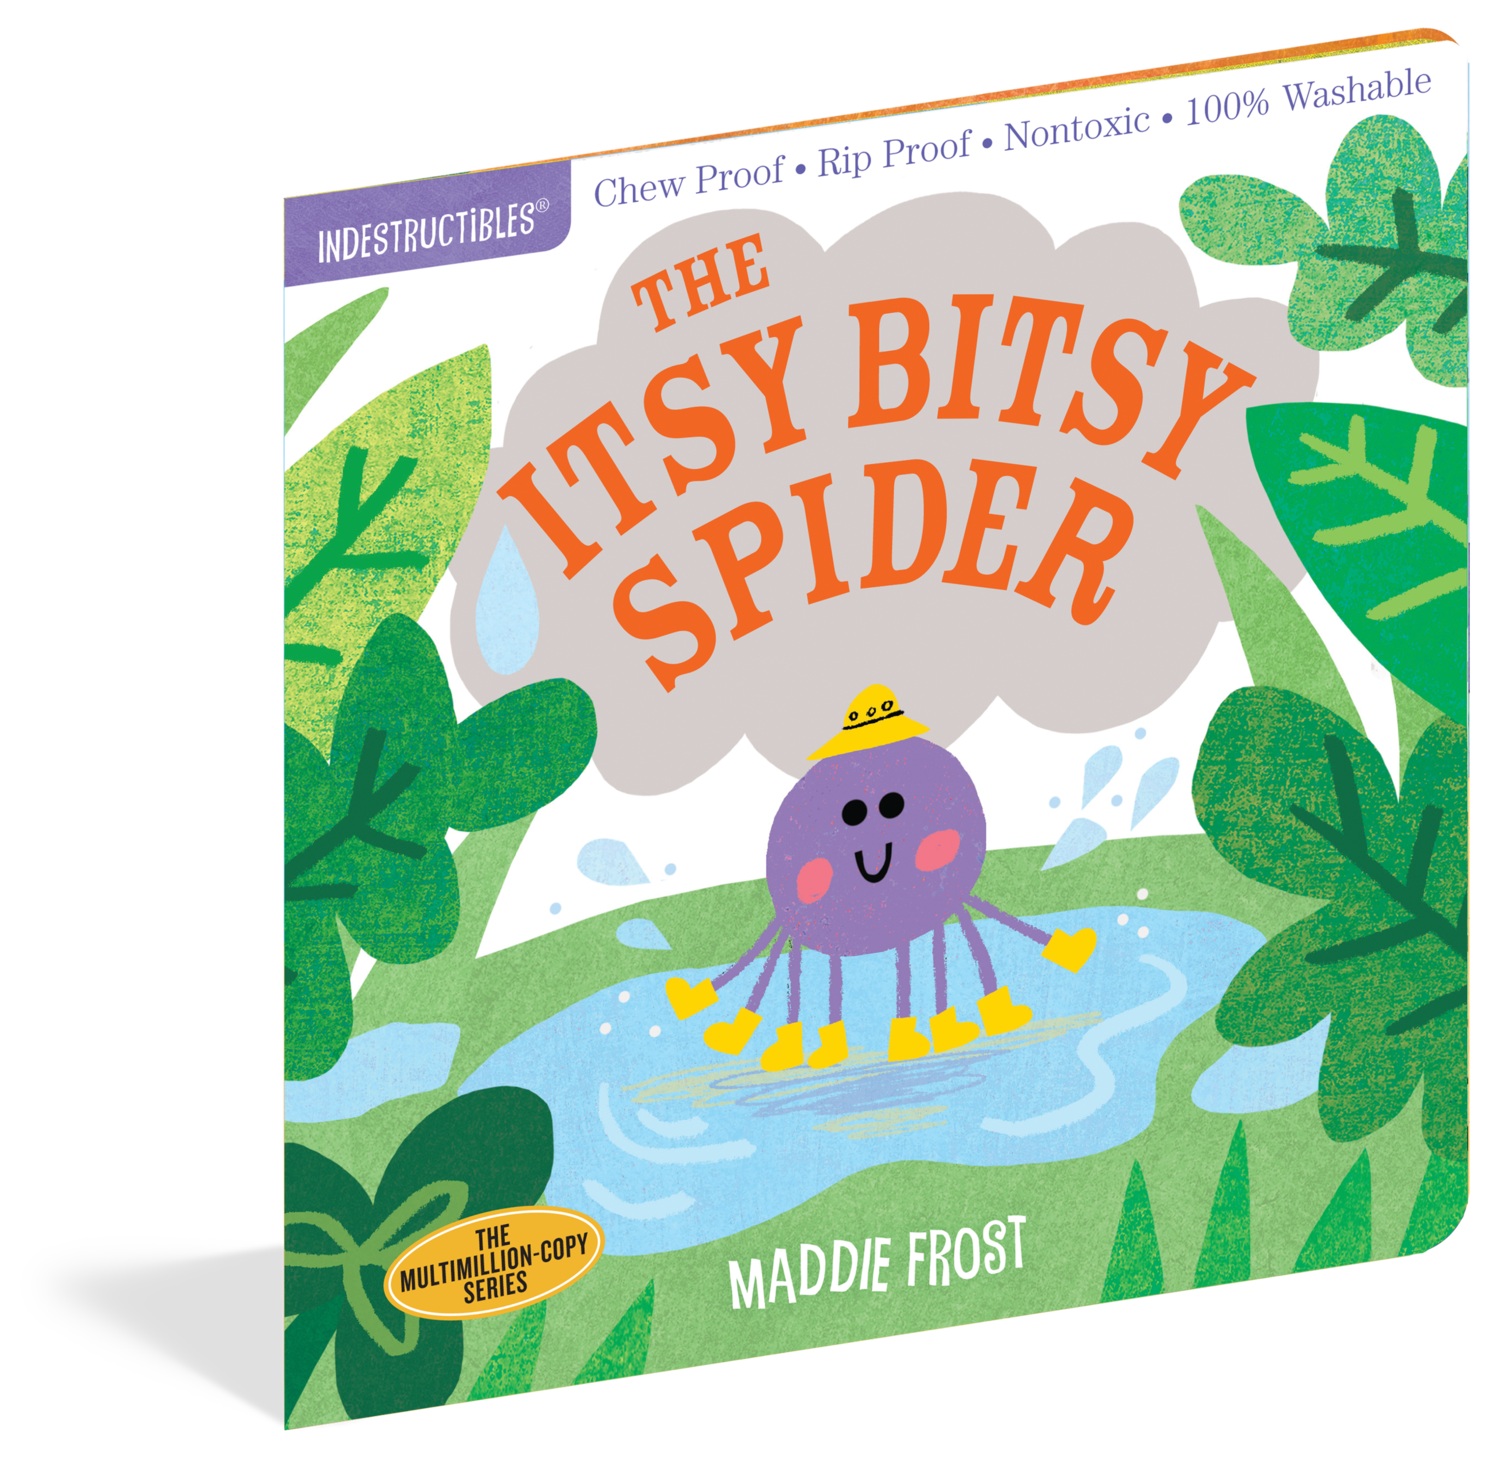 INDESTRUCTIBLES- Itsy Bitsy Spider*